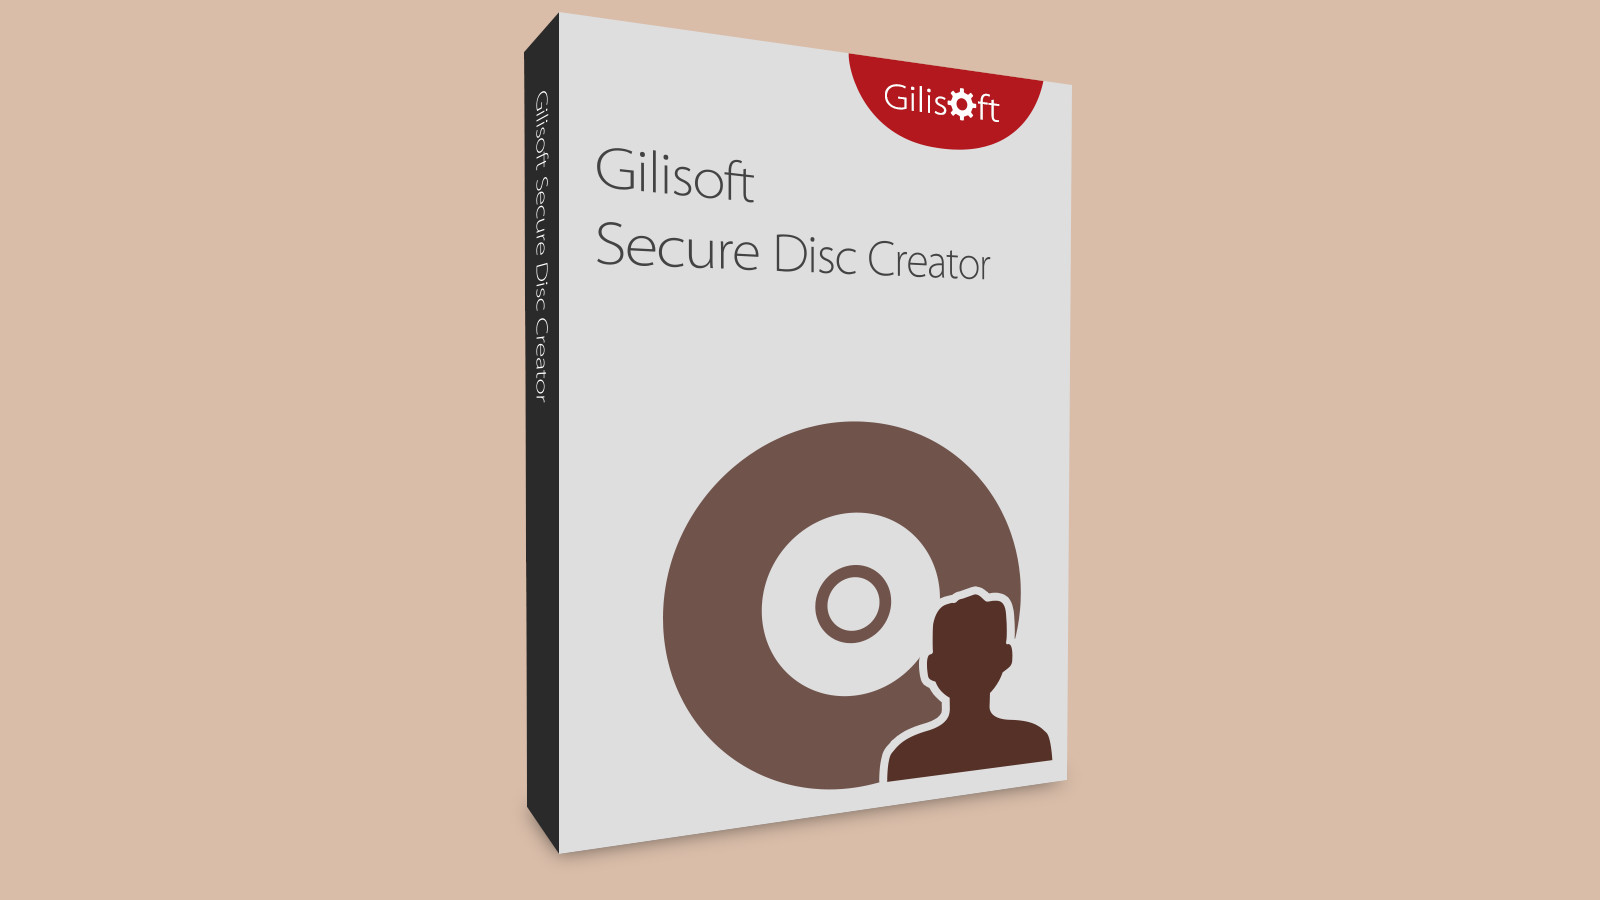 Gilisoft Secure Disc Creator CD Key [USD 6.84]